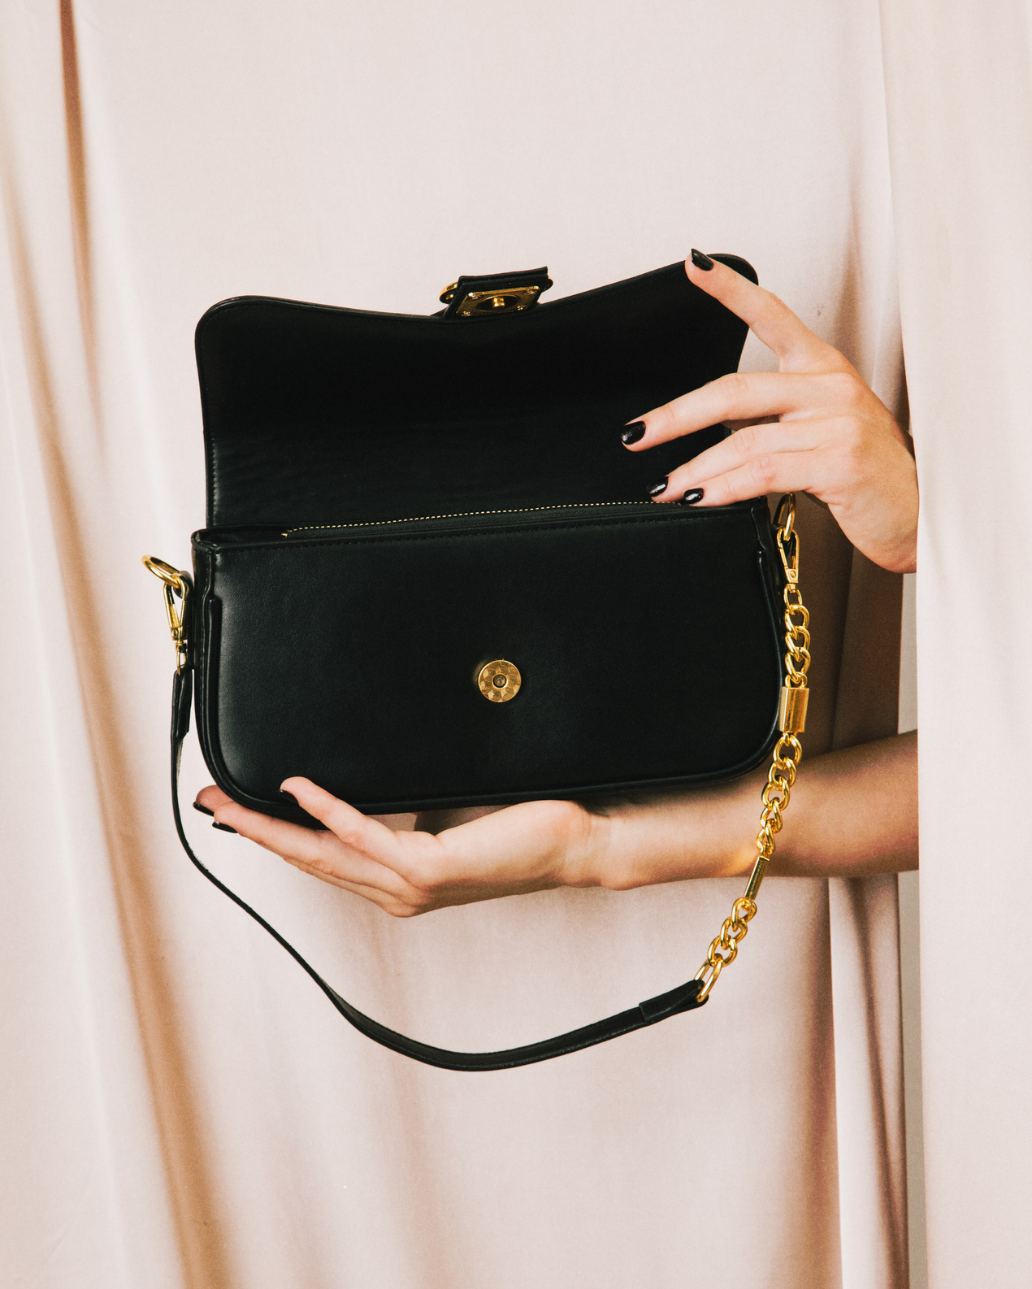 Rebecca Minkoff BLACK Leather Crossbody Handbag w/ Chain Strap - 8.5